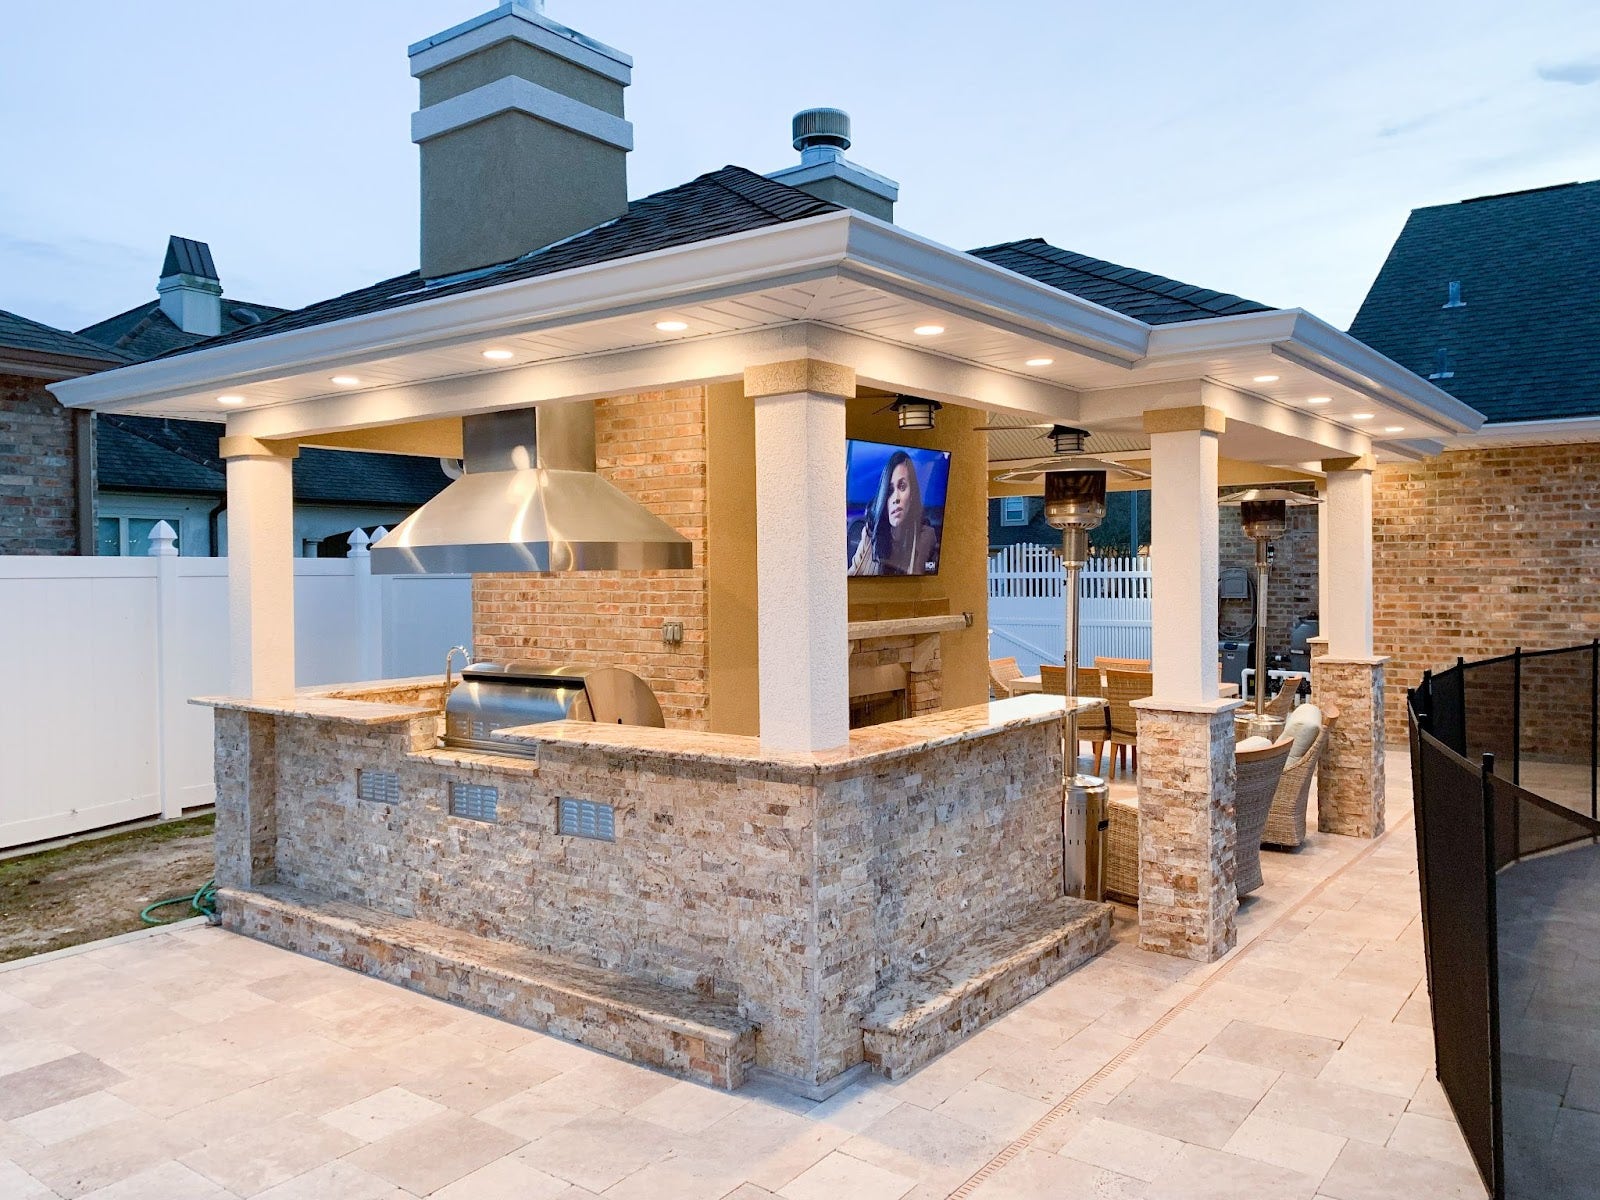 Proline range hood in a luxurious outdoor kitchen pavilion with evening lighting - prolinerangehoods.com